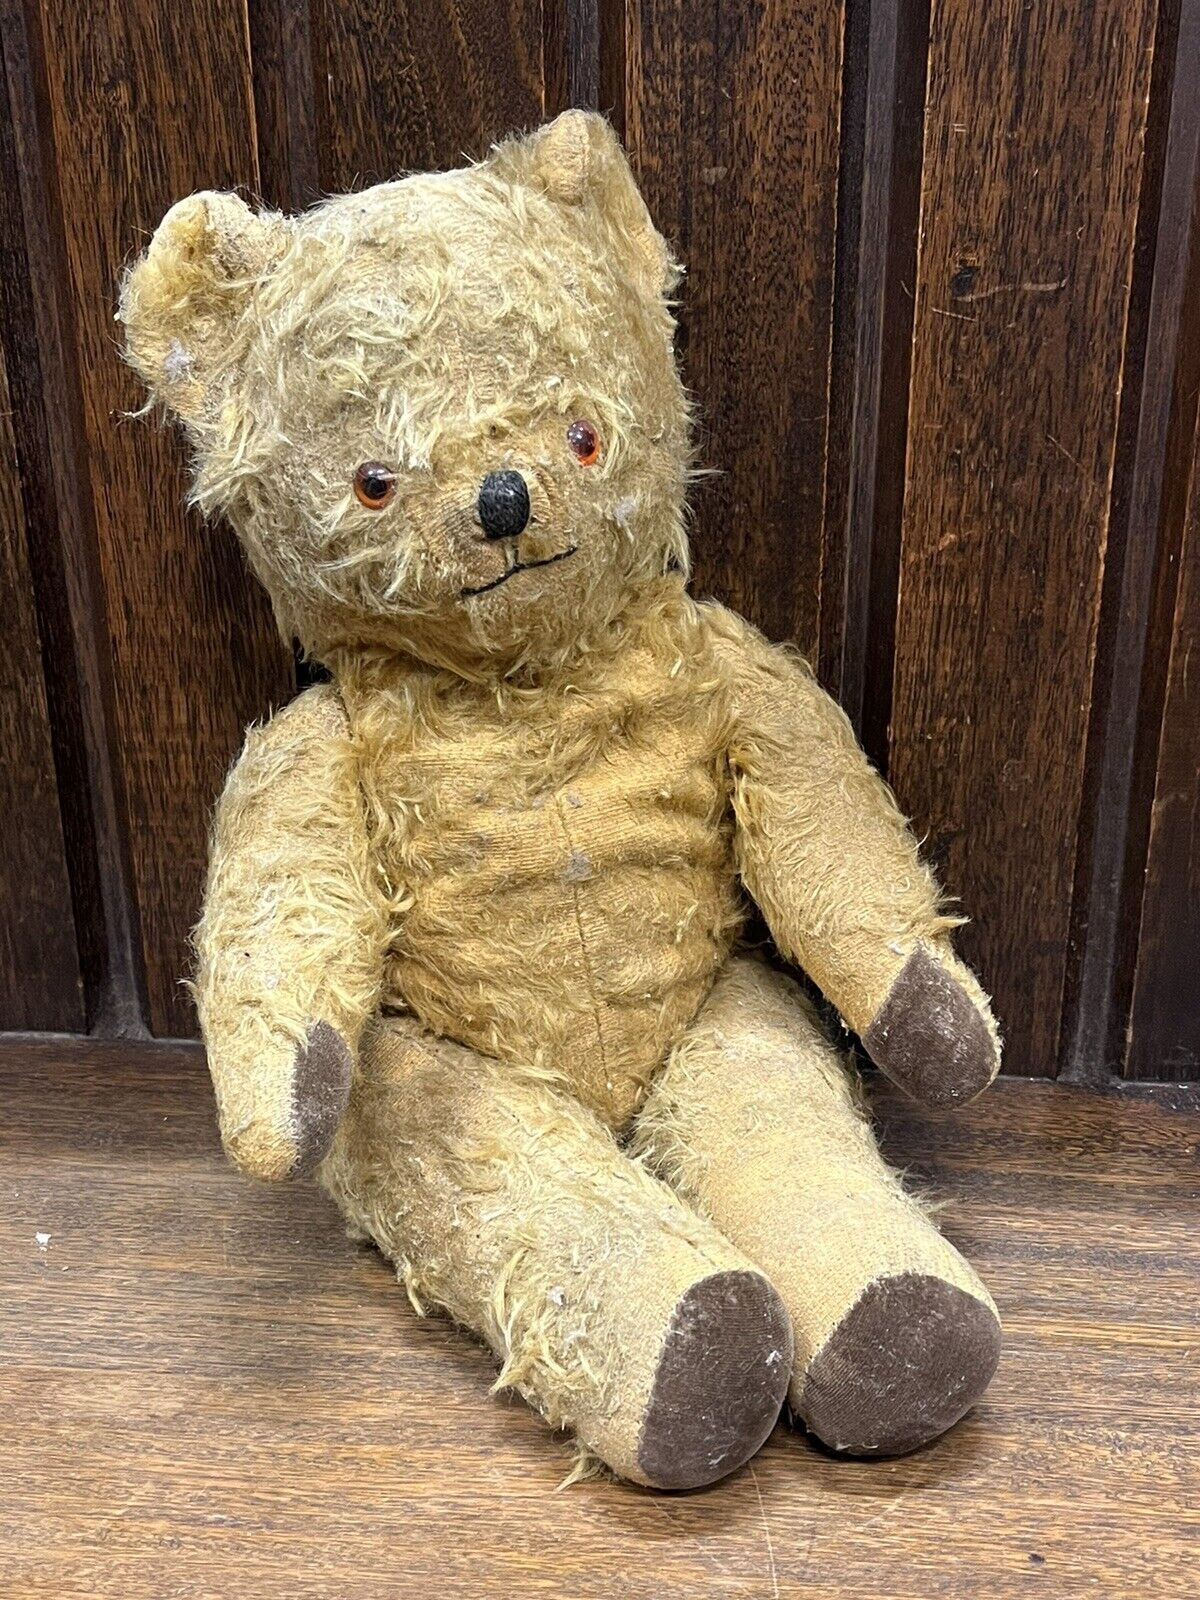 Antique Teddy Bear